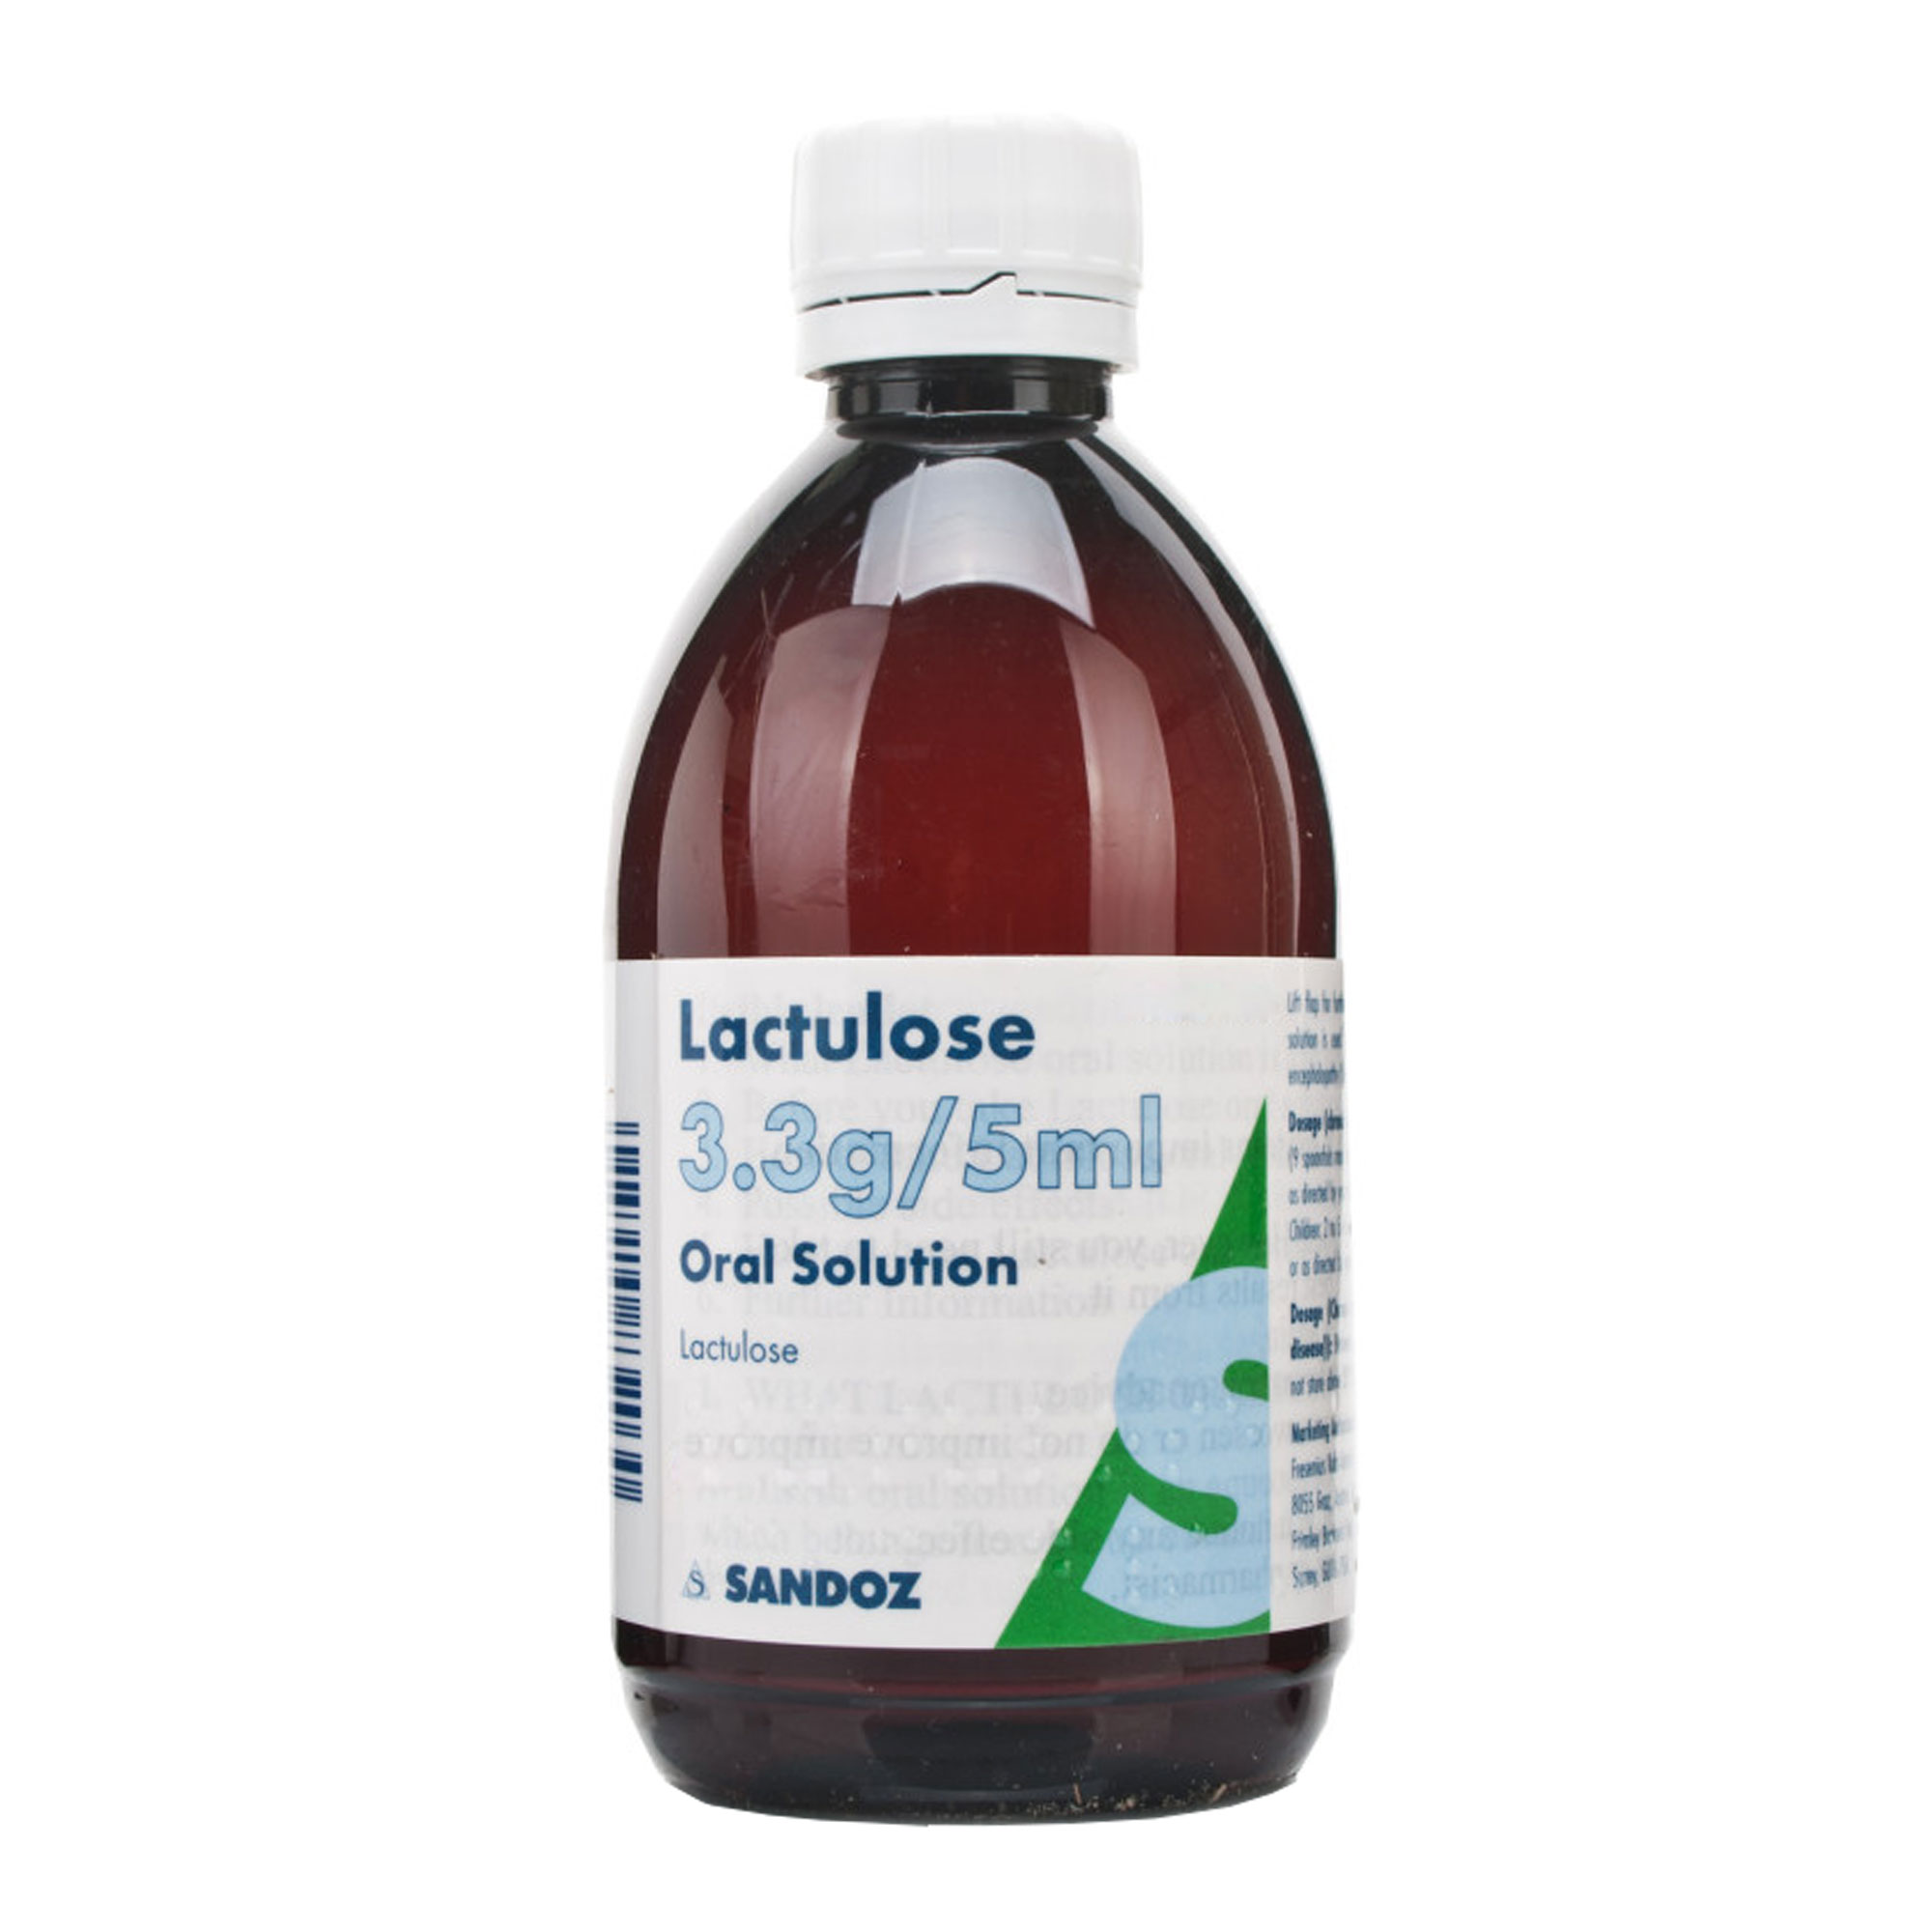 liquid laxative for adults